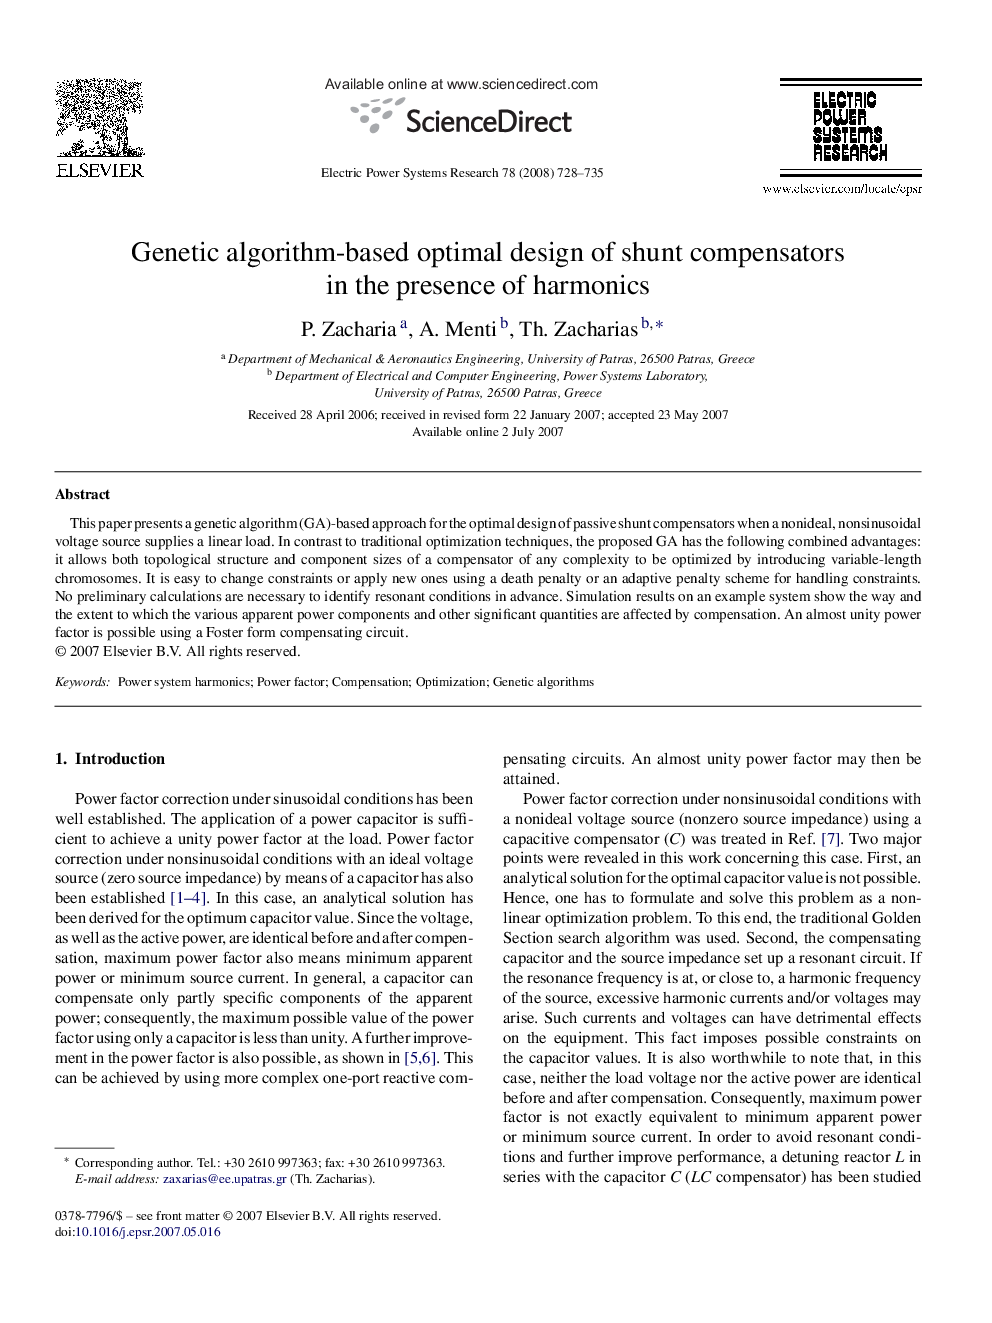 Genetic algorithm-based optimal design of shunt compensators in the presence of harmonics